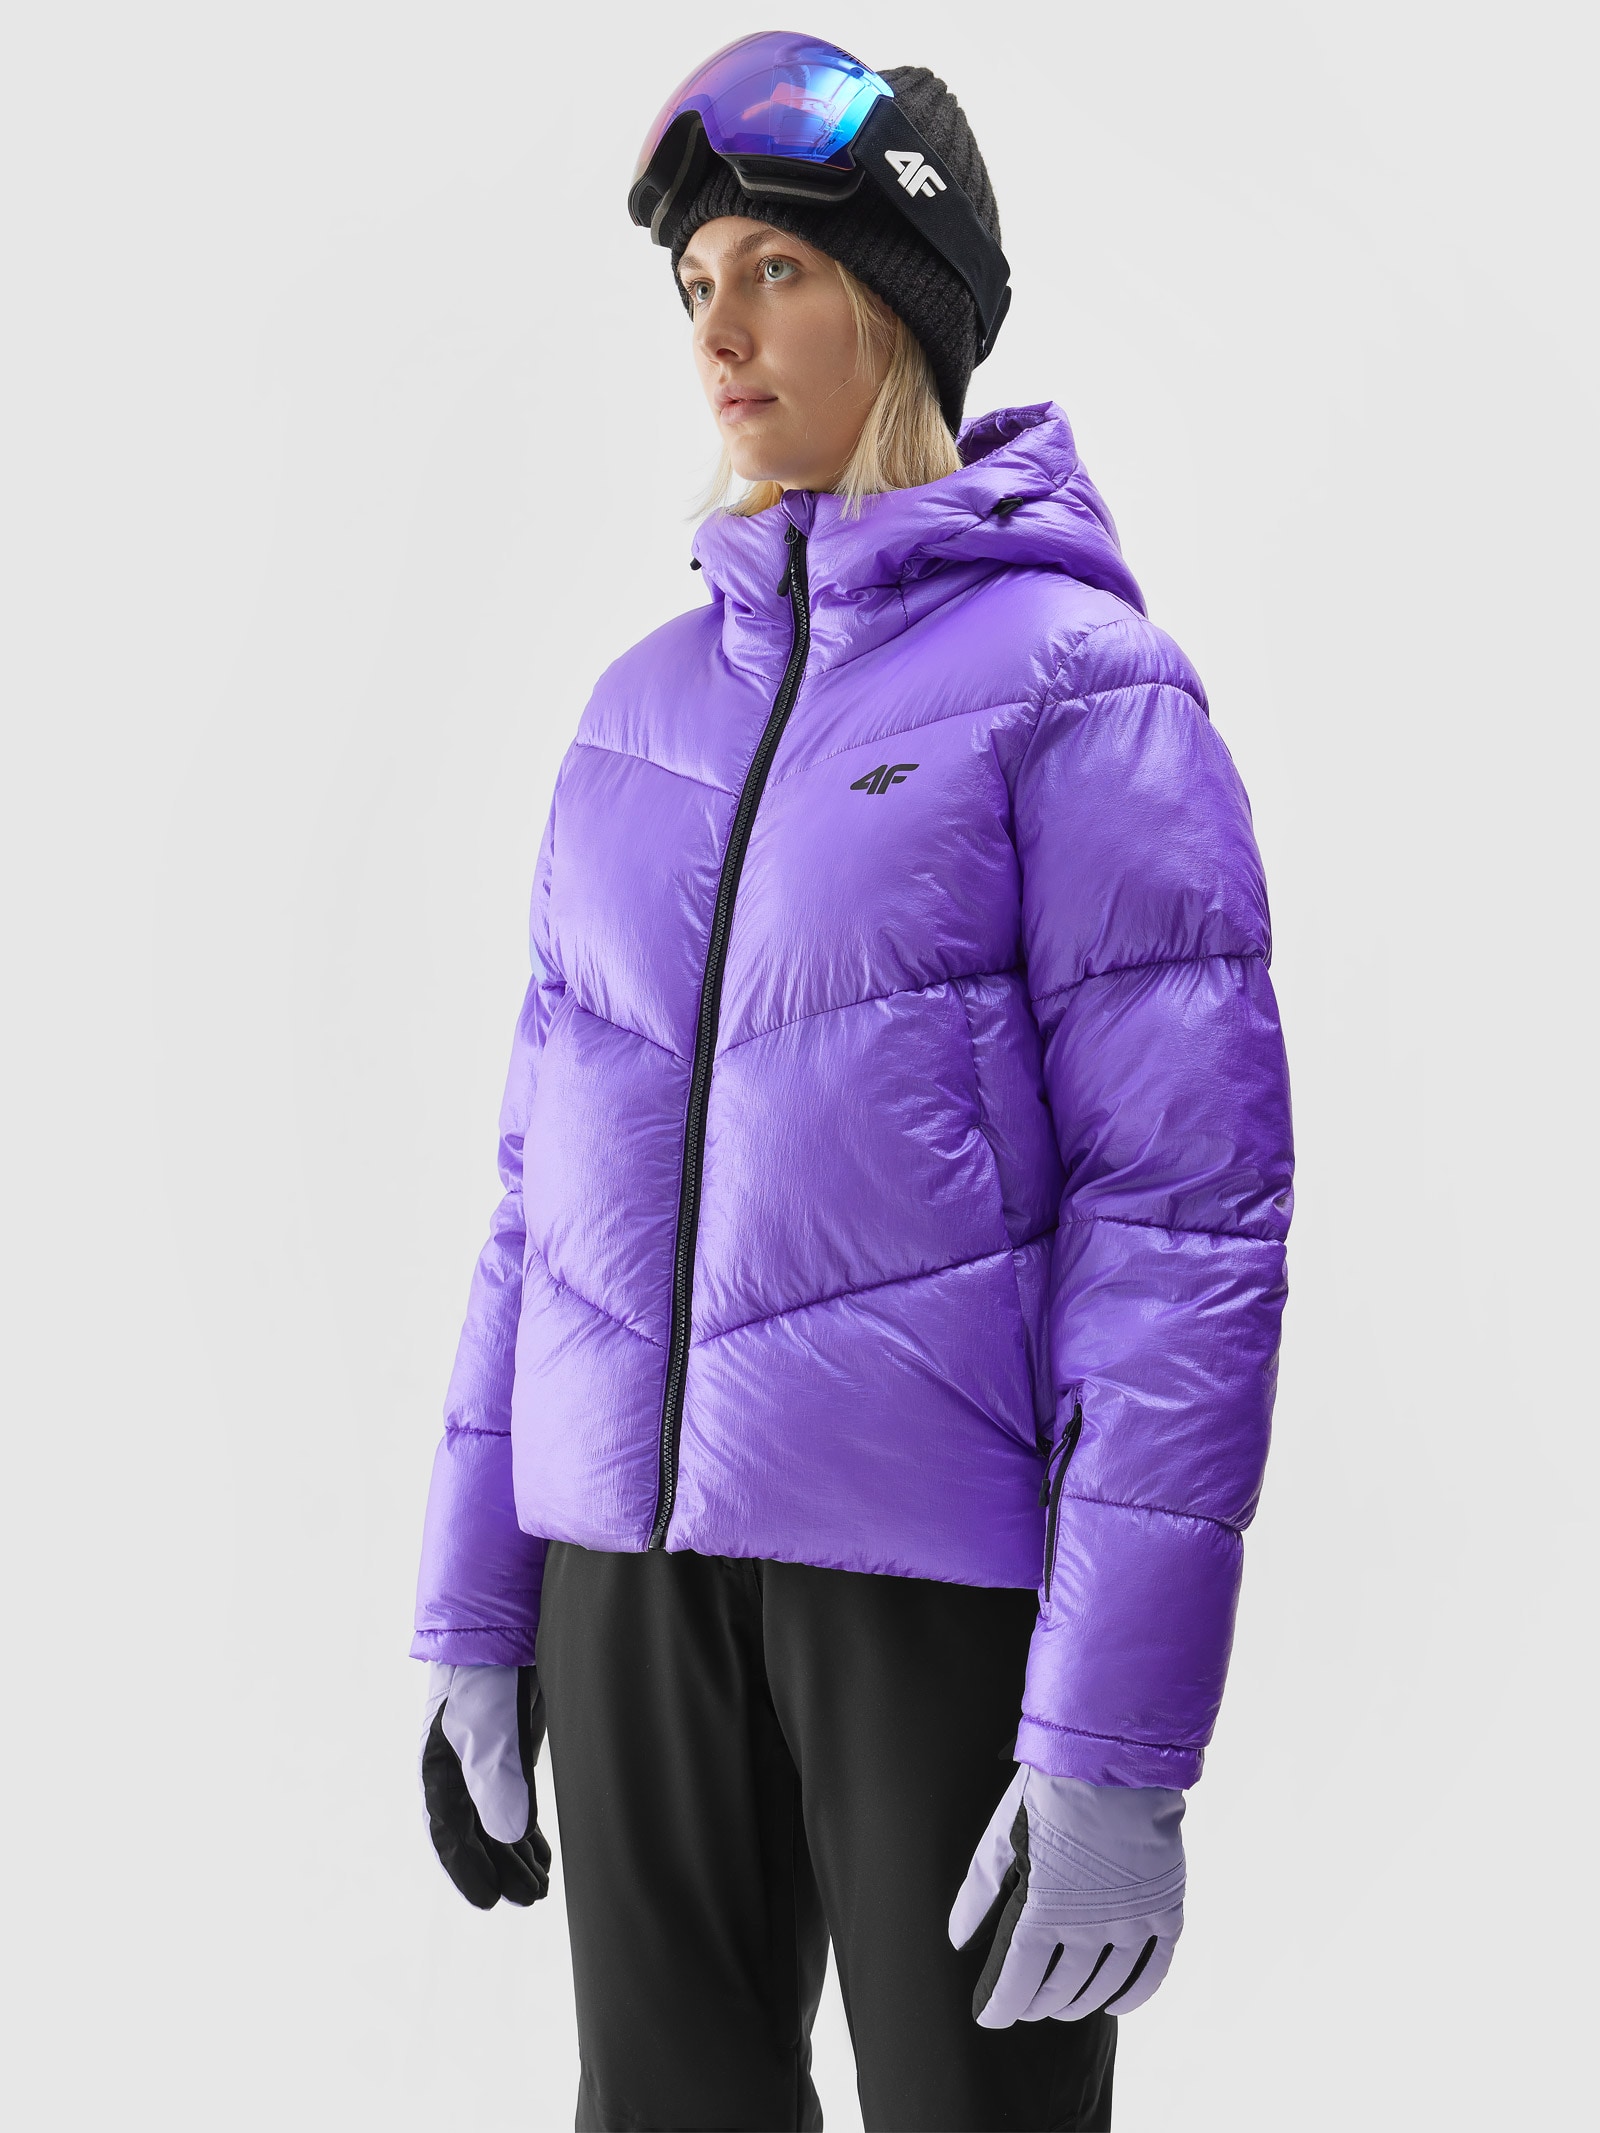 Dámska zatepľovacia lyžiarska bunda so syntetickou výplňou - fialová